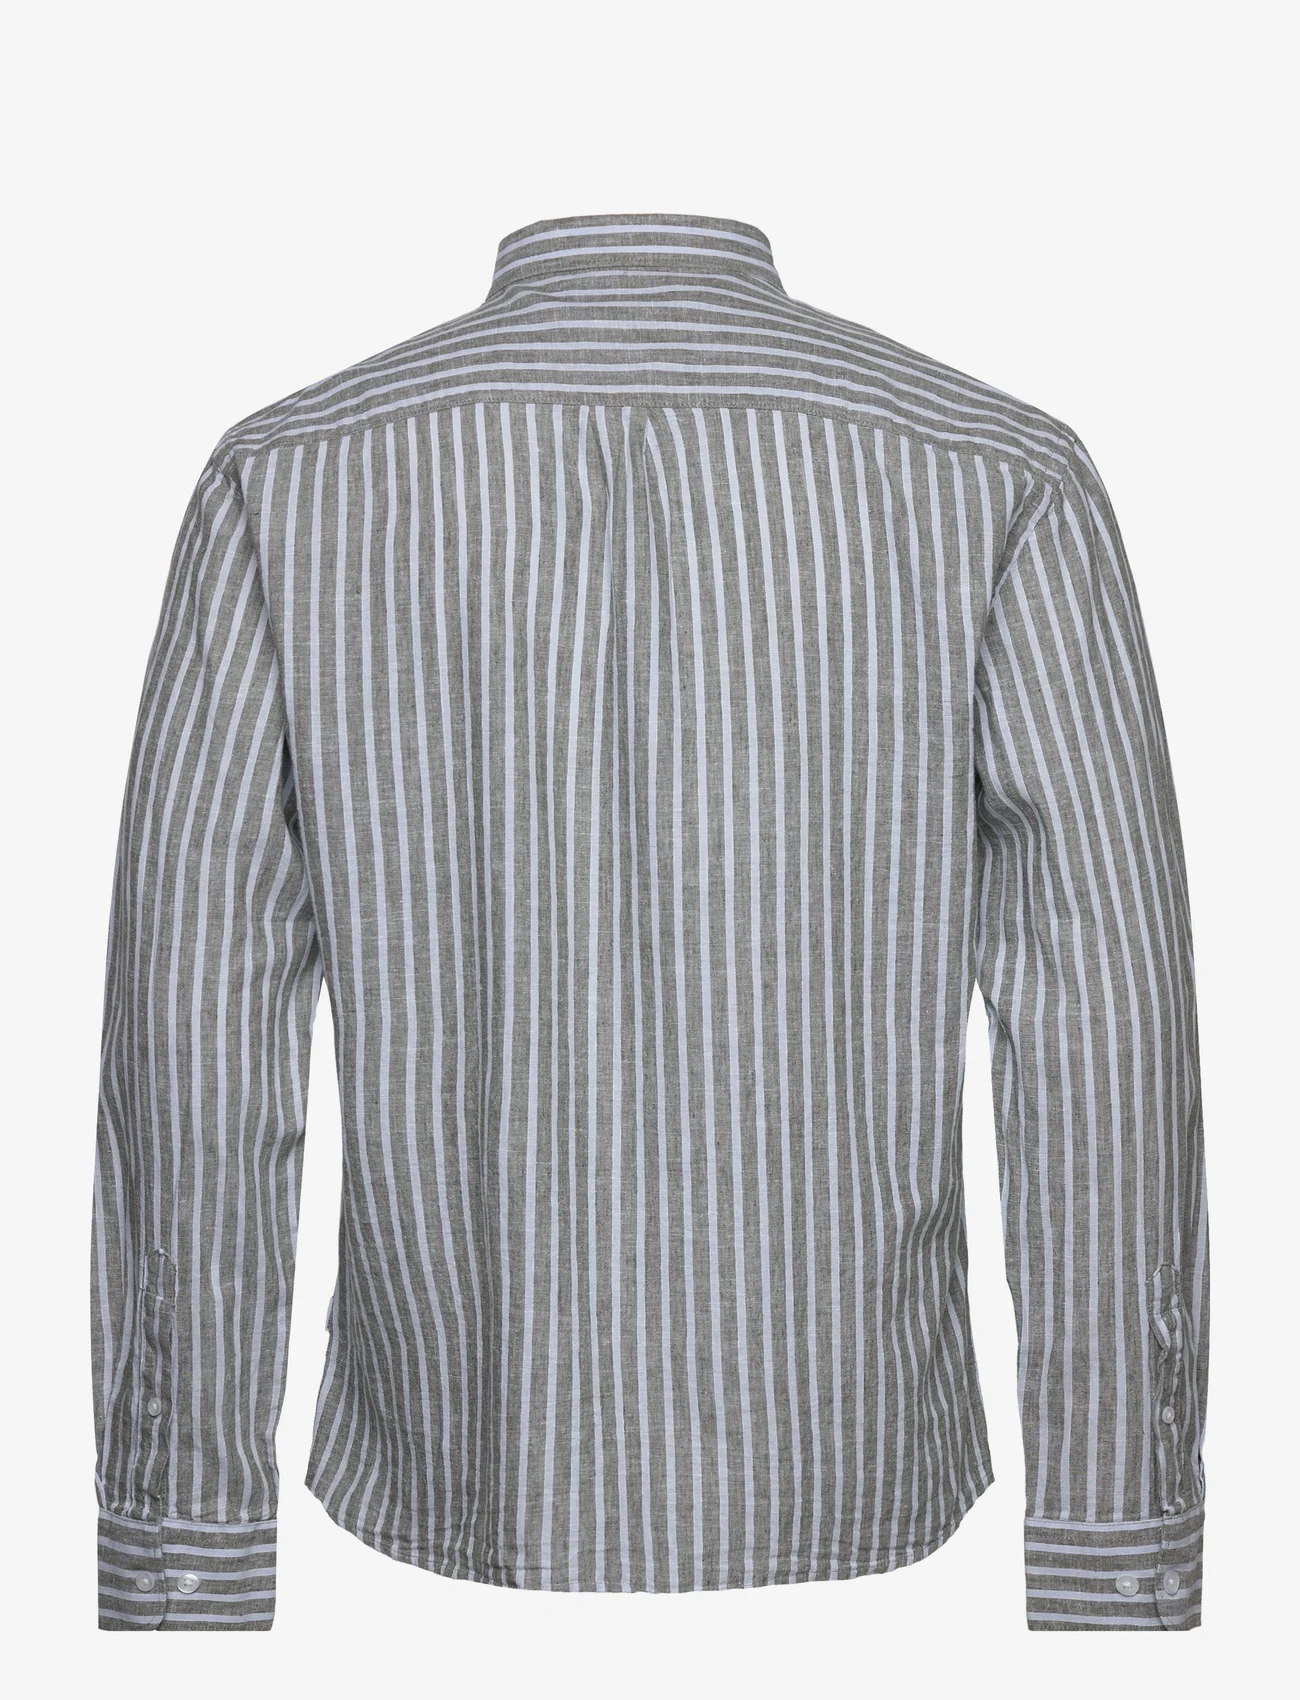 Lindbergh - Striped cotton/linen shirt L/S - linen shirts - army - 1